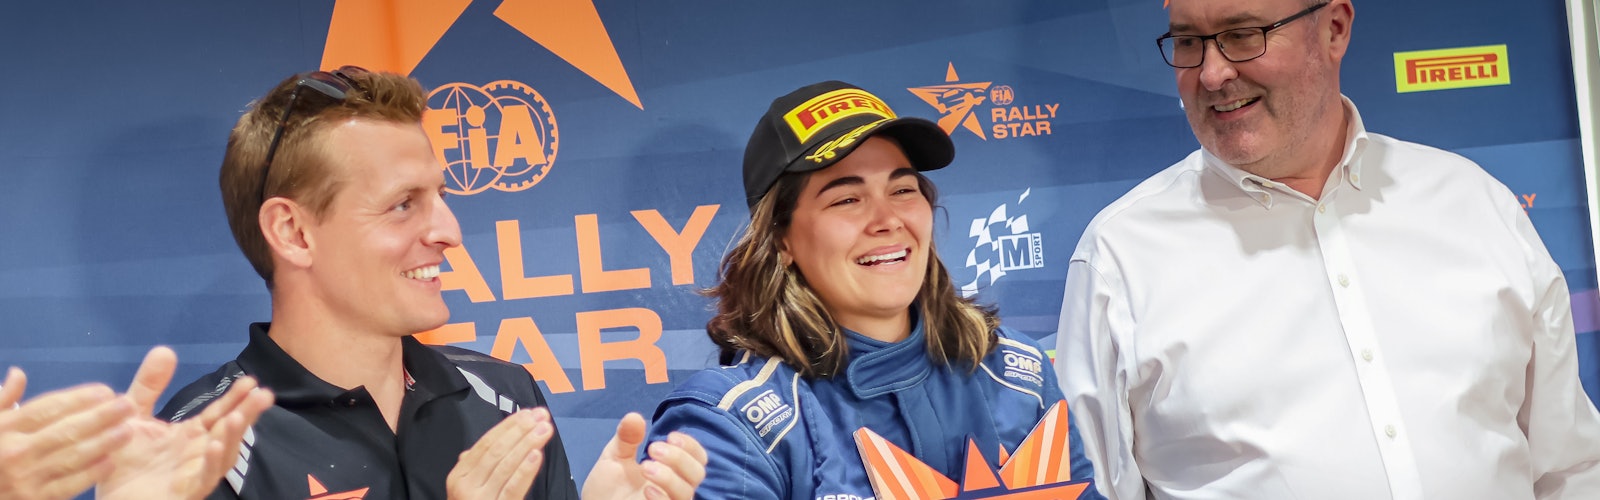 FIA Rallye Star 2023 / Finals America  / Italy